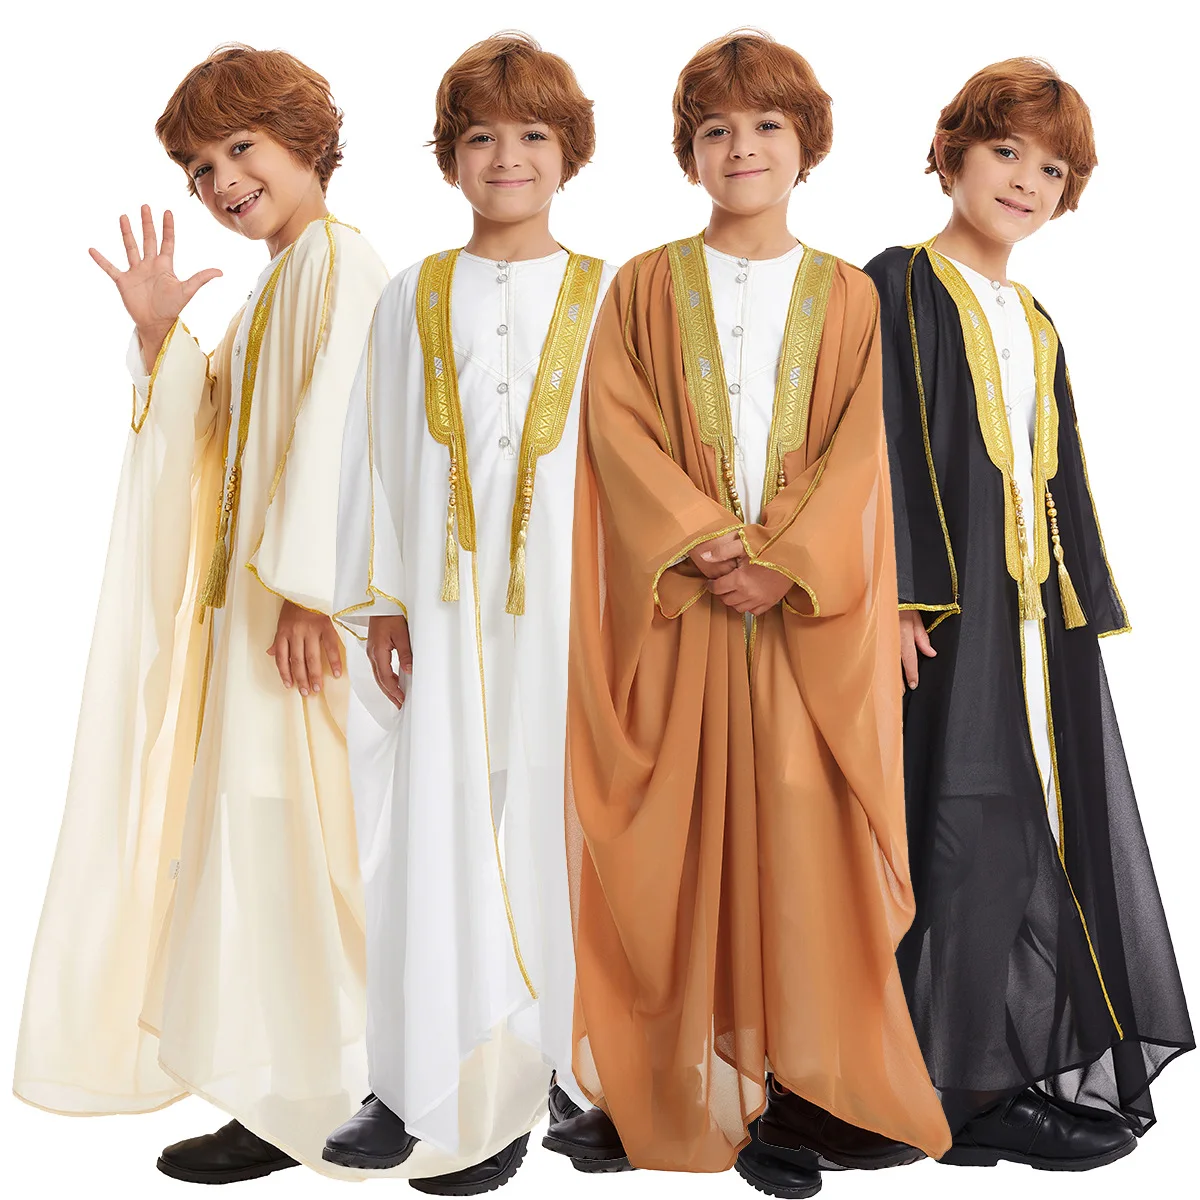 

Muslim Men Clothing Teen-Agers Chiffon Cardigan Eid Muslim Boys Robe Jubba Thobe Abaya Dubai Kids Kaftan Arab Islamic Dress